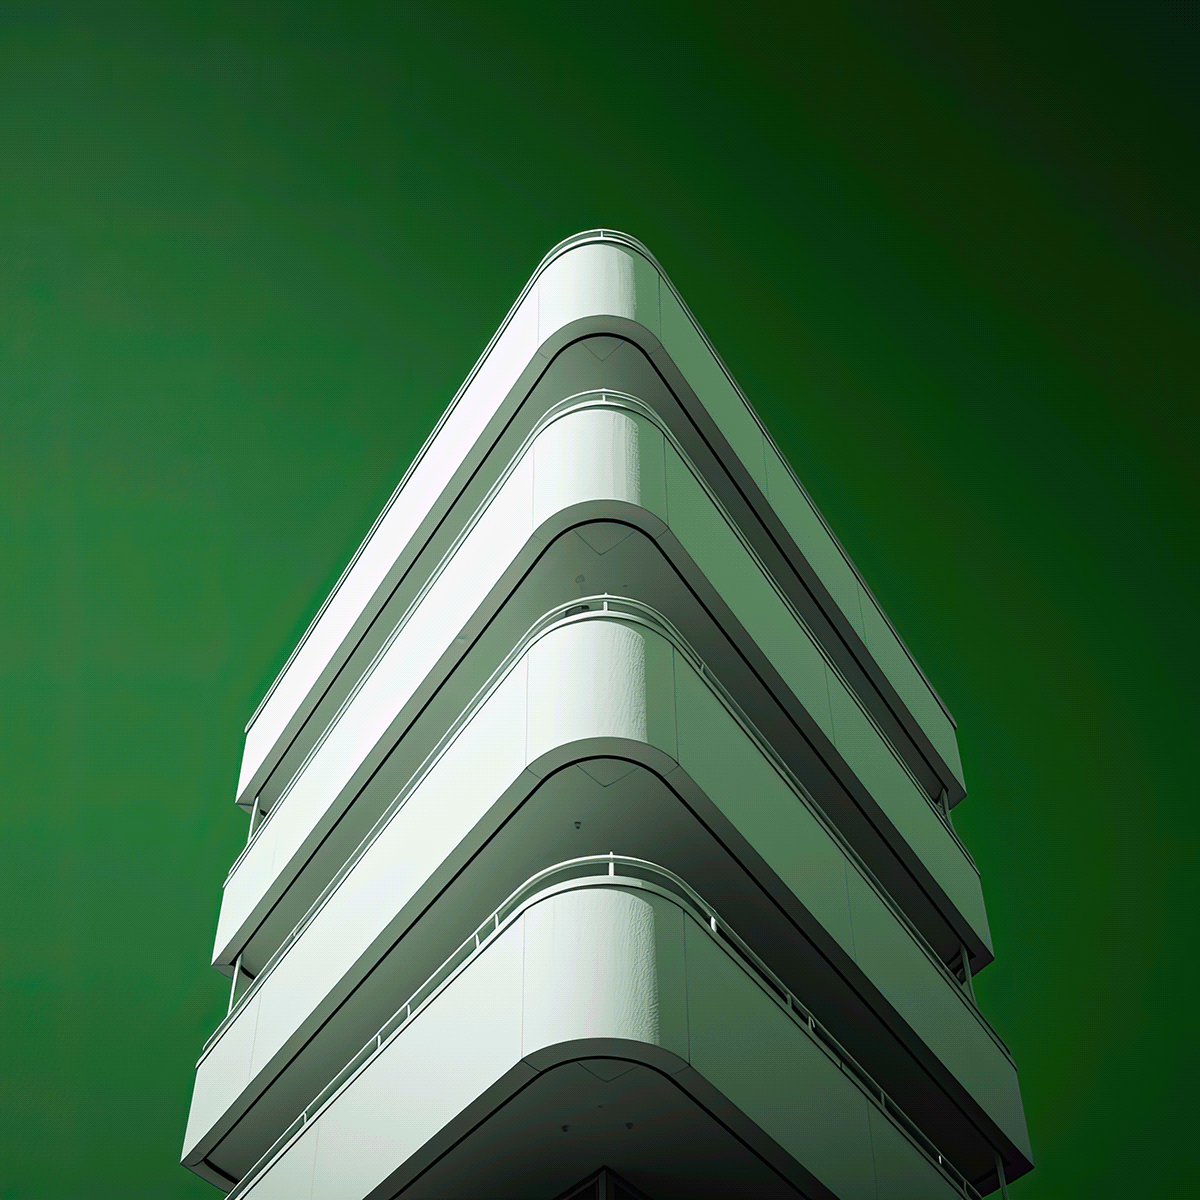 architecture building exterior CGI minimalist clean simple colors Digital Art  Photography 